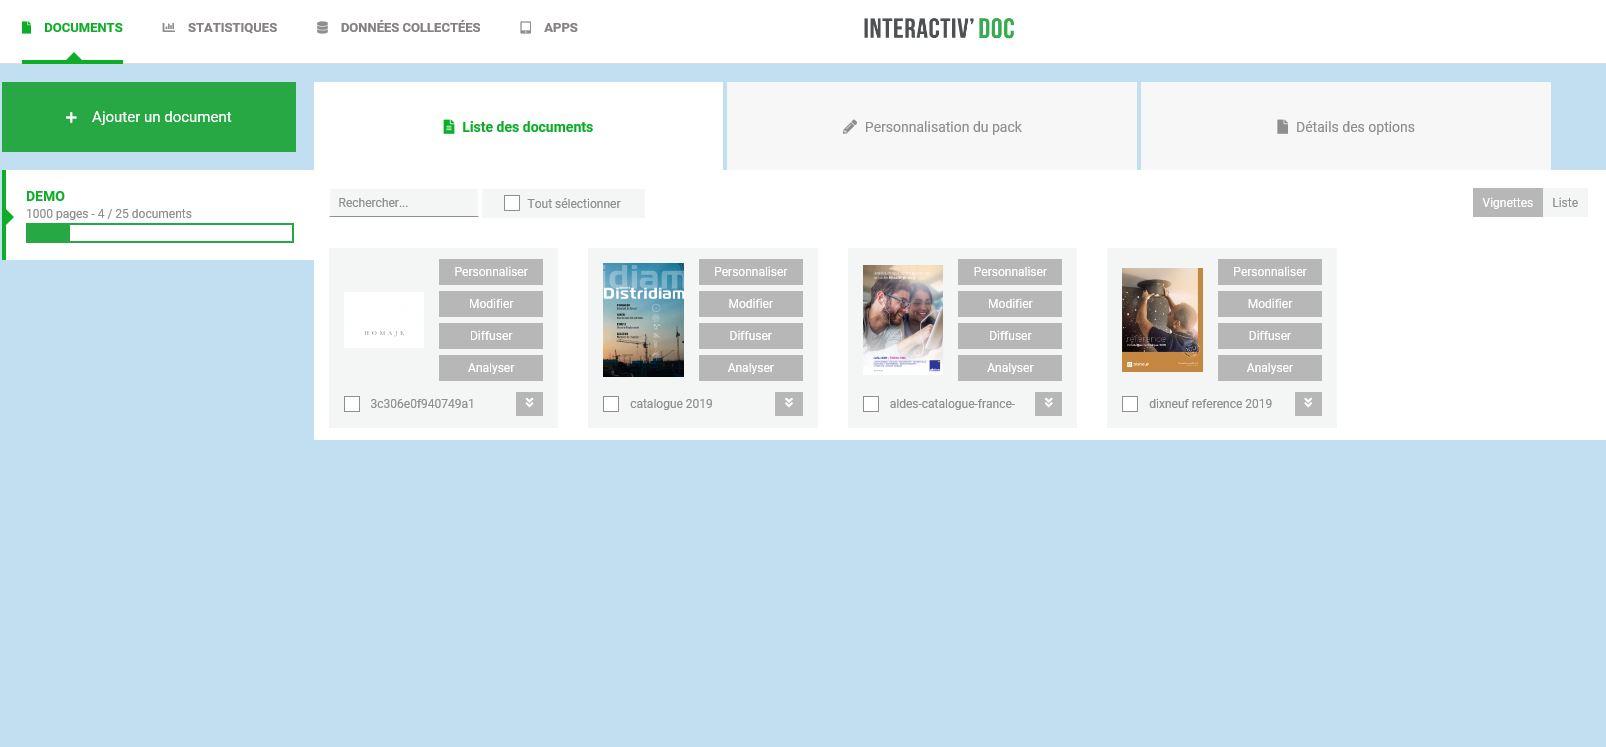 Interactiv' Doc - Screenshot 2